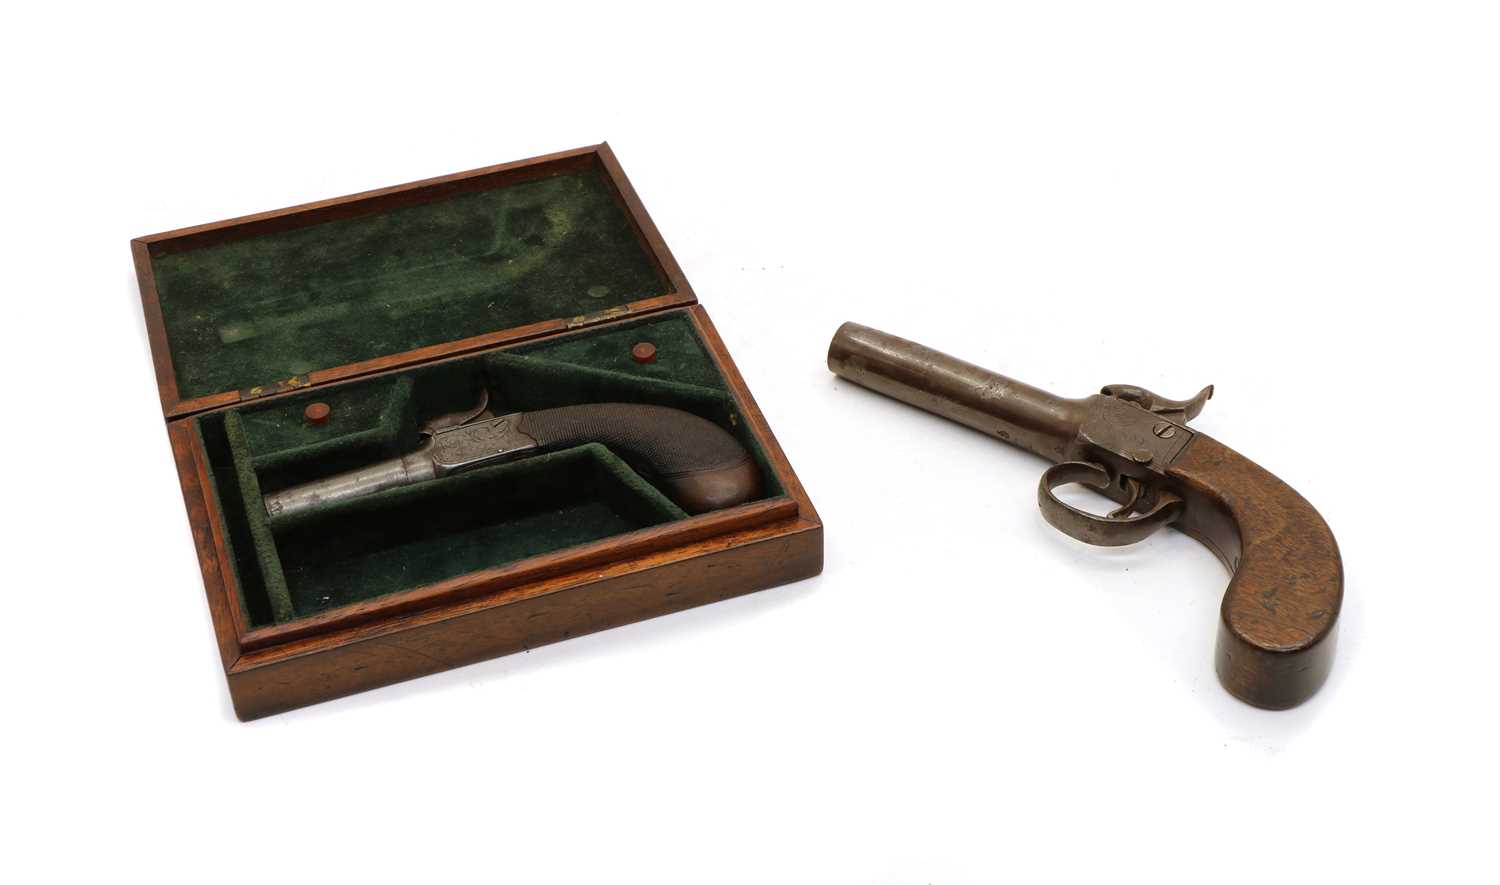 Lot 49 - A 19th century percussion pocket pistol